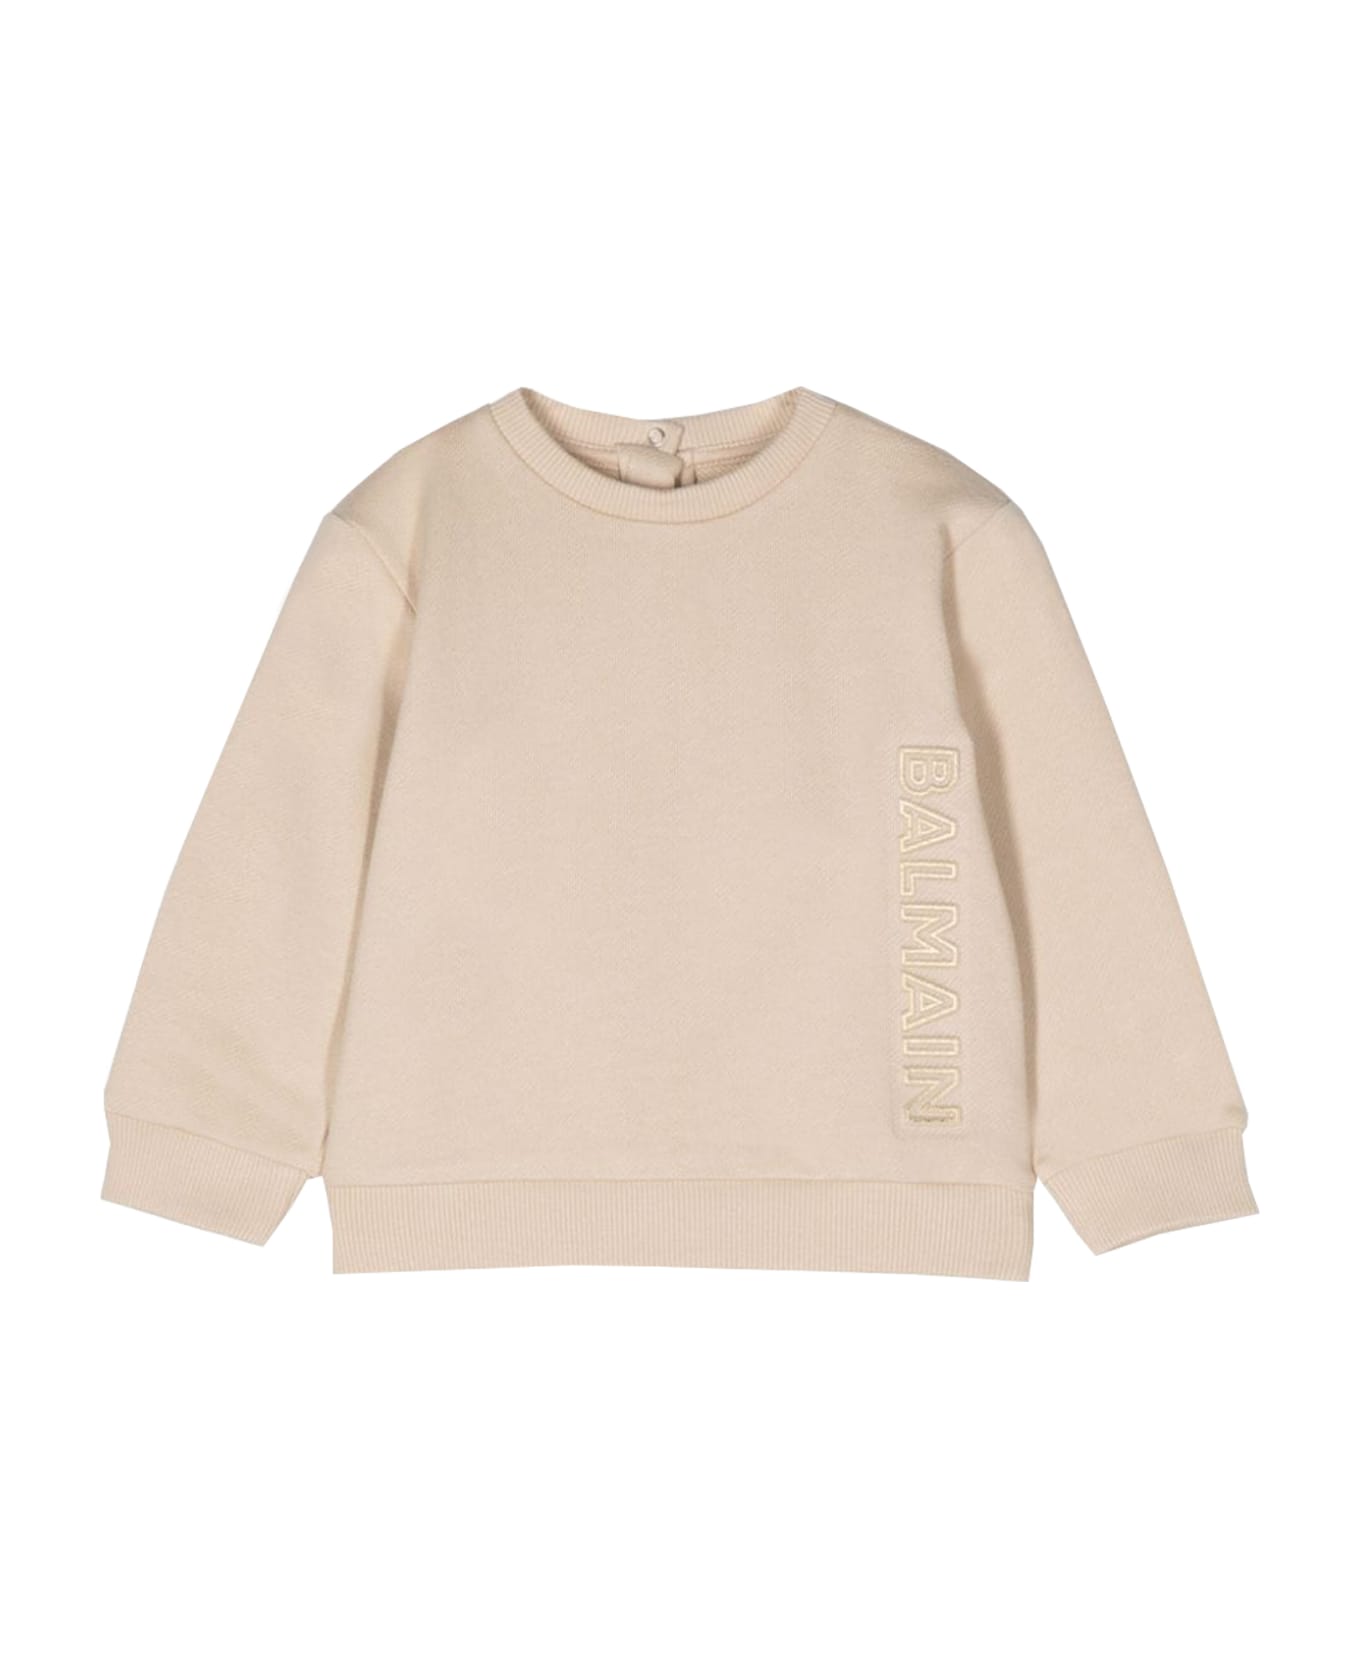 Balmain Cotton Sweatshirt - Beige